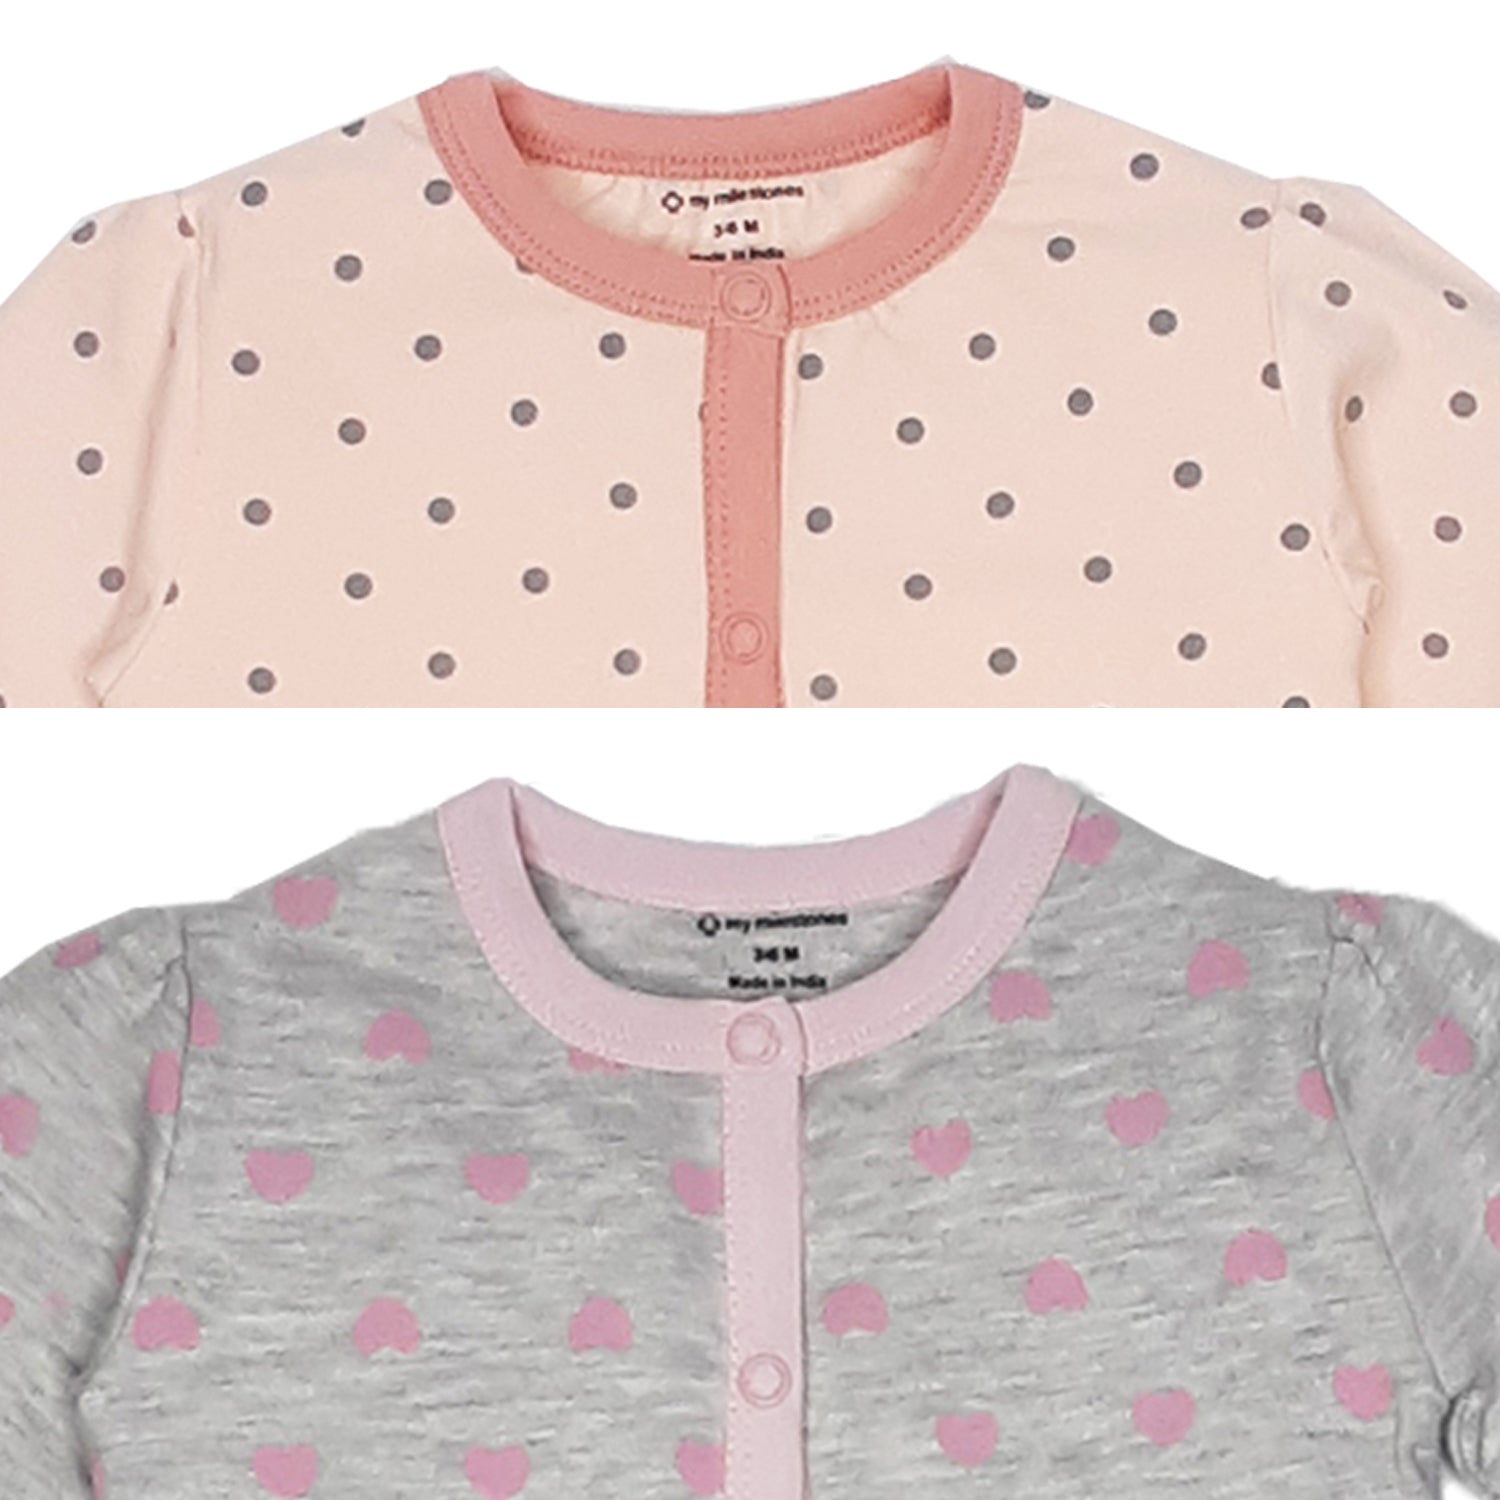 My Milestones T-shirt Full Sleeves Girls Peach Polka / Grey Hearts - 2 Pc Pack